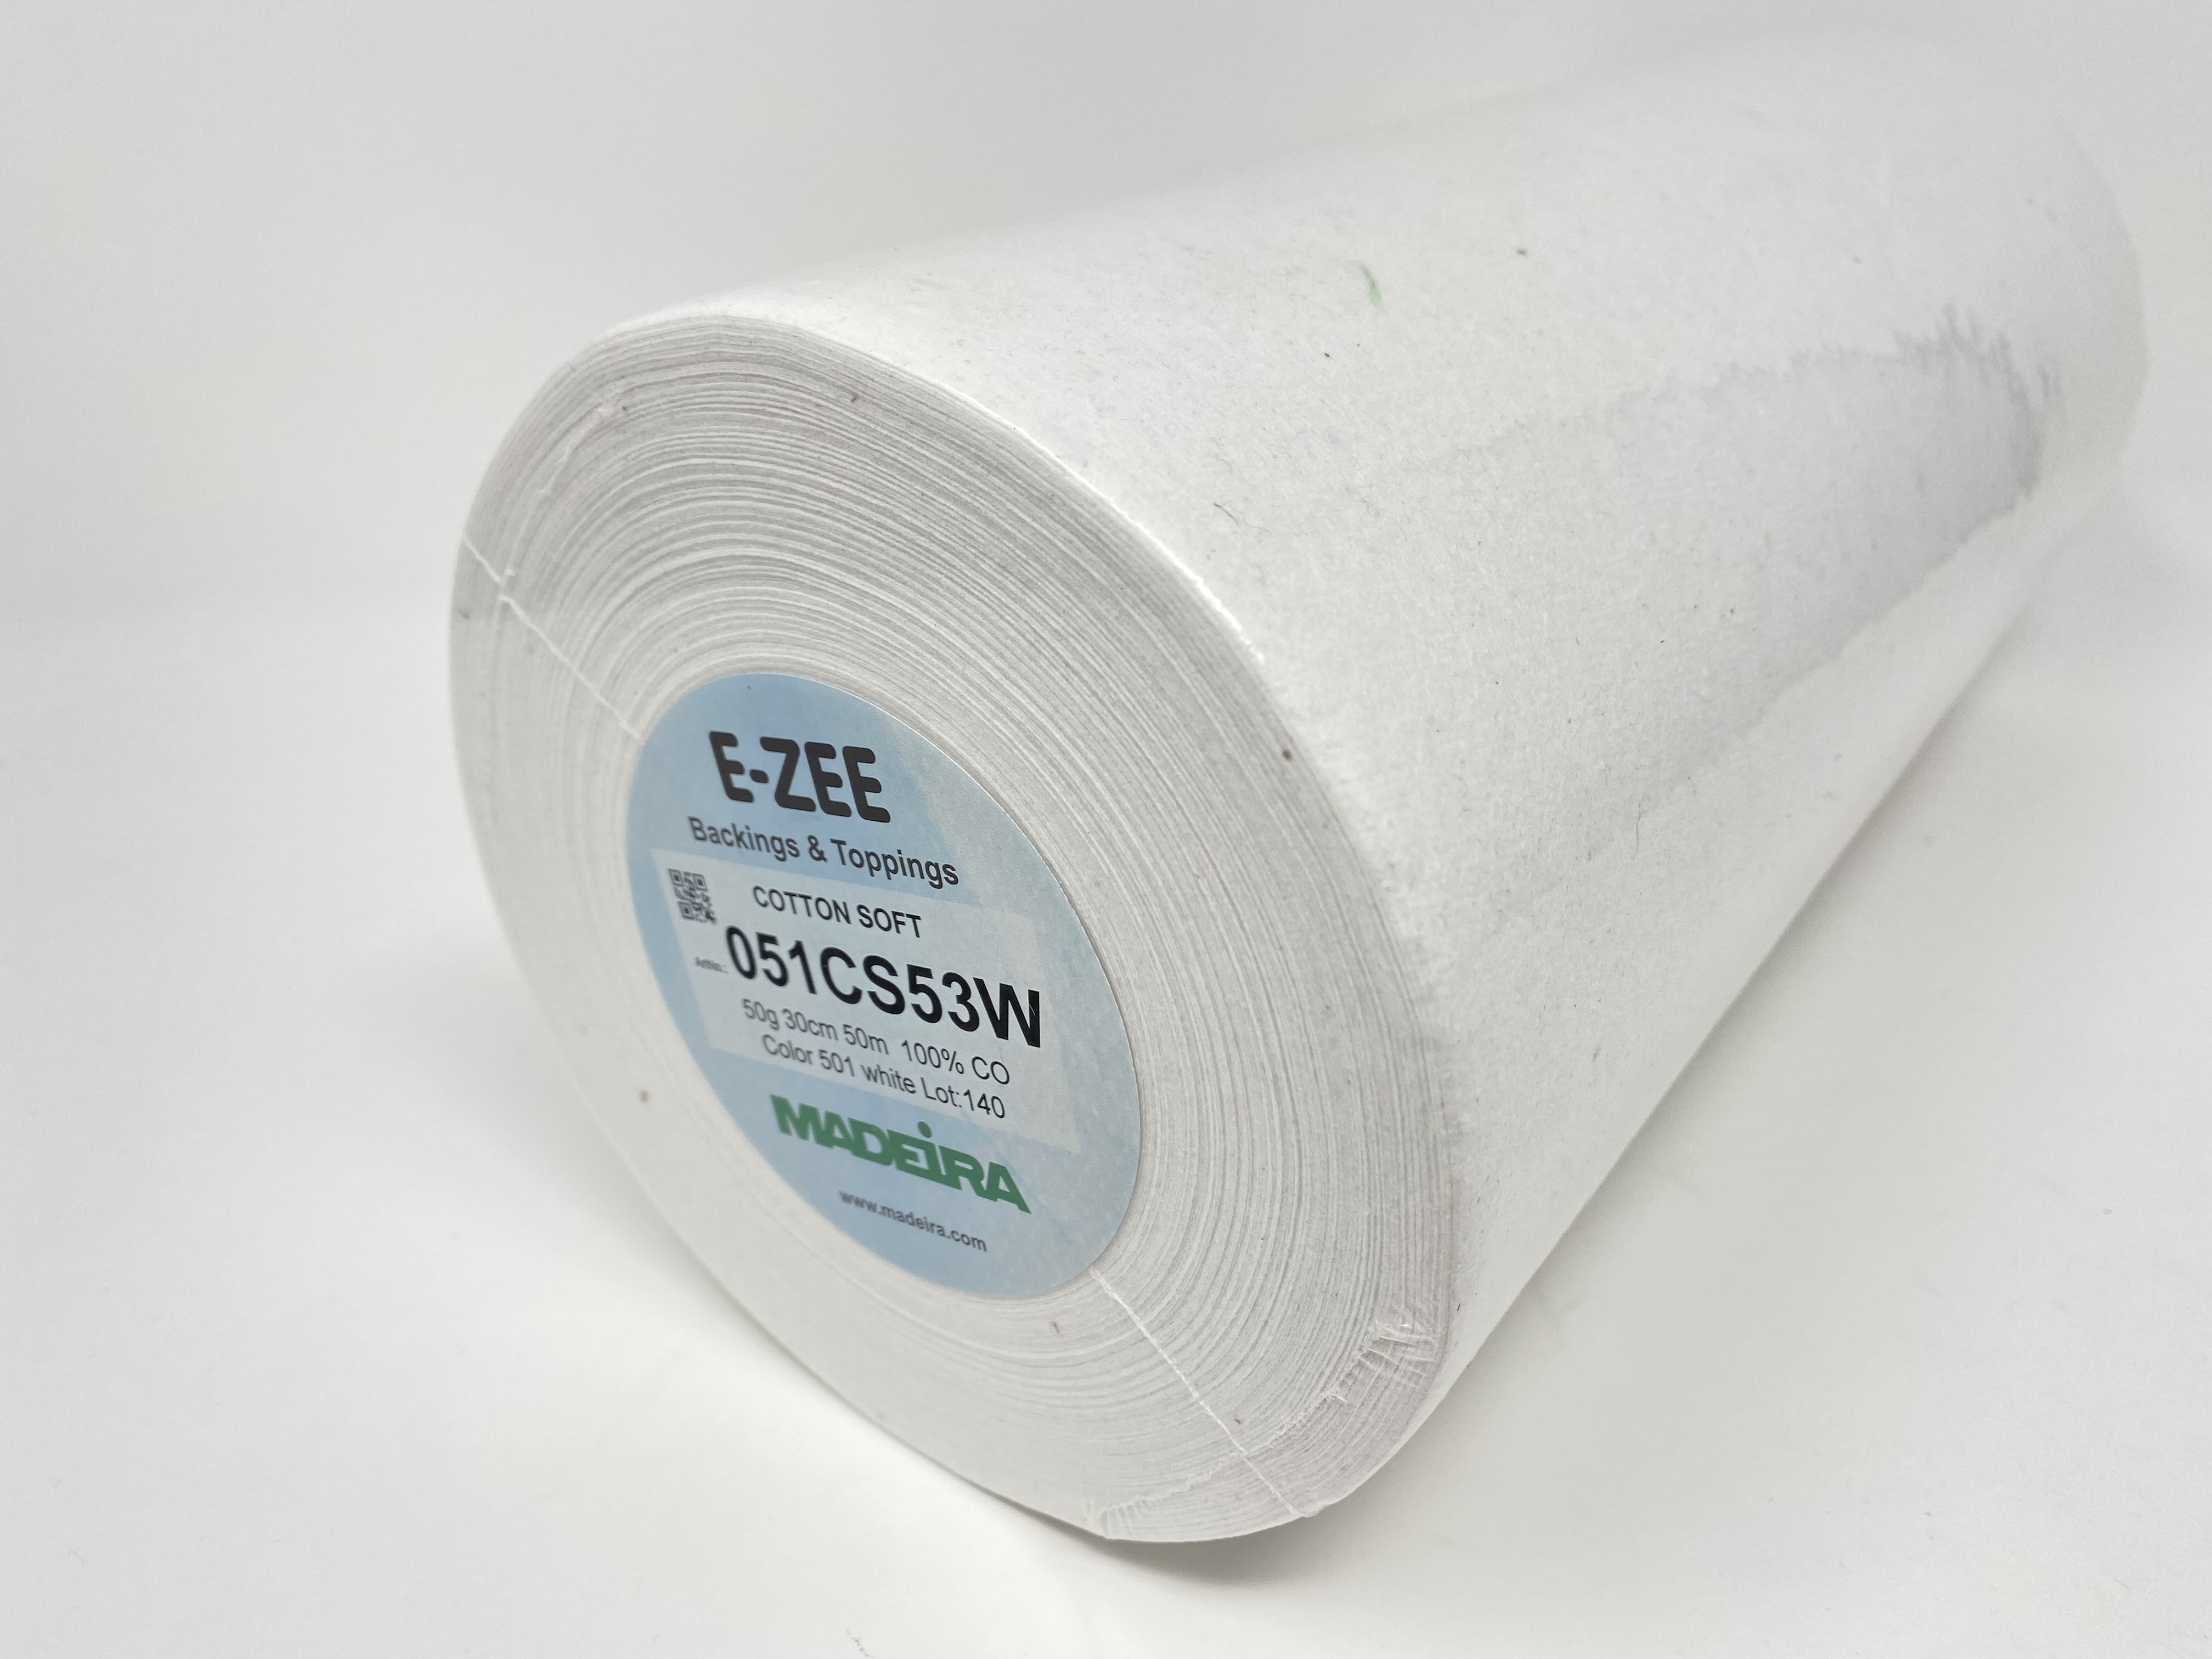 50 m x 0,30 m 50 g/m² , Madeira E-ZEE EZEE Cotton Stickvlies Reißvlies Stickerei Vlies 